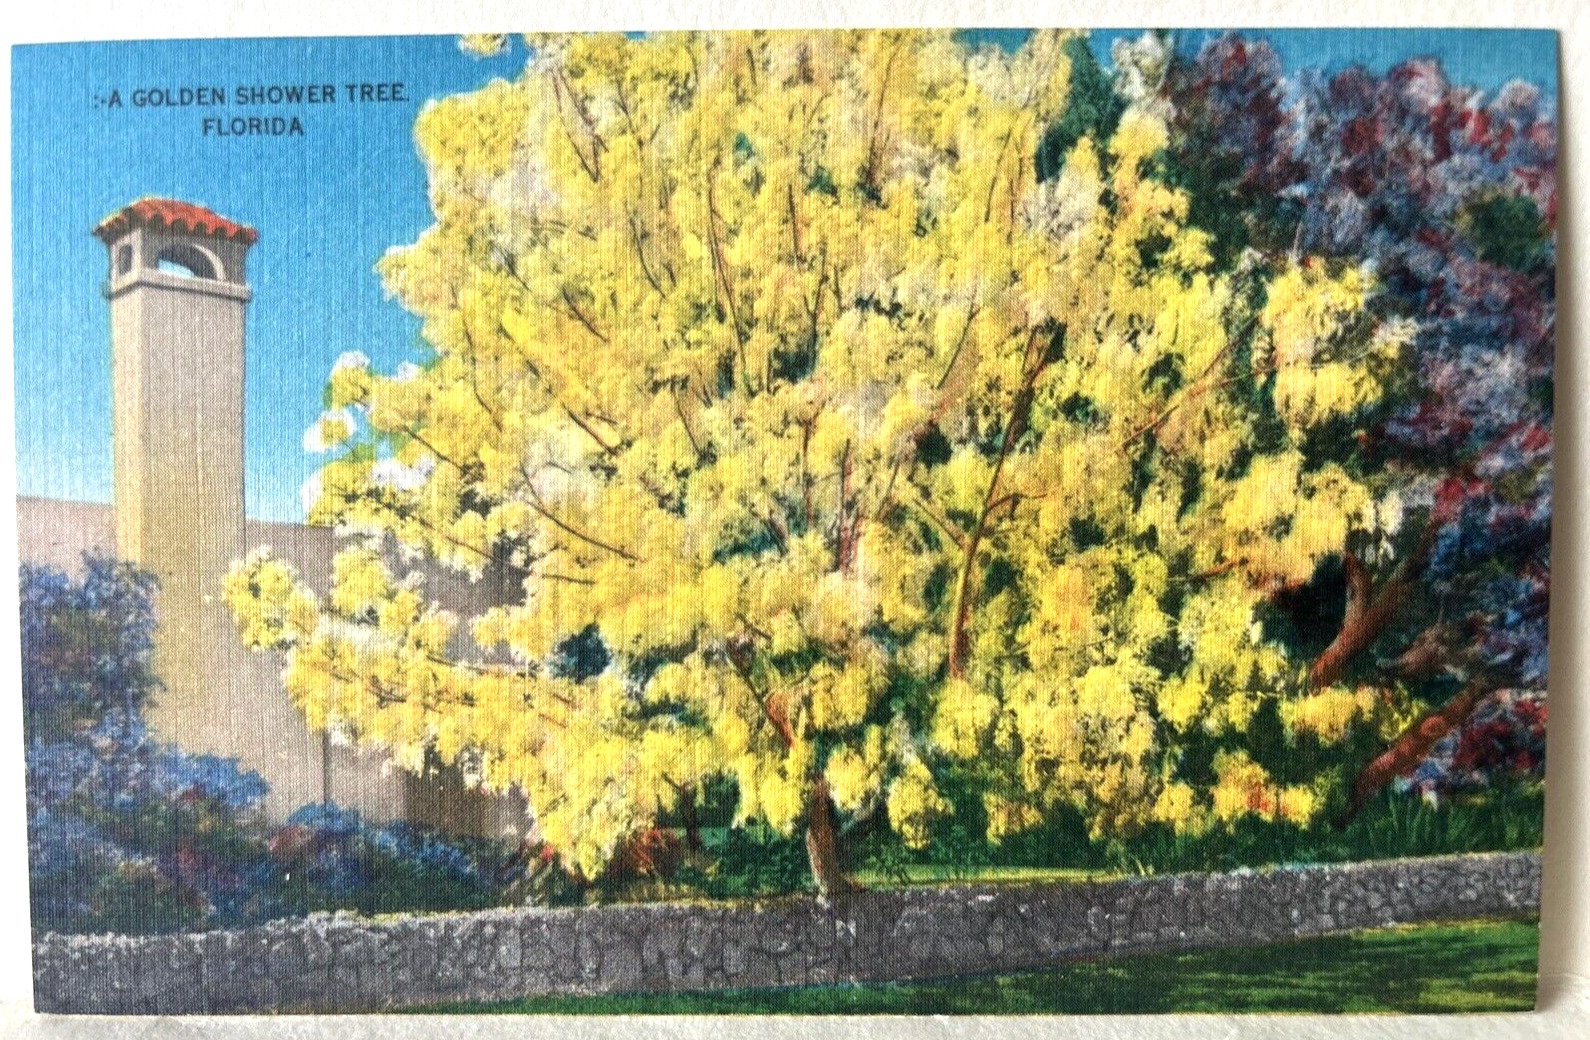 Florida, A Golden Shower Tree VTG Linen Postcard c1930s/40s - A3